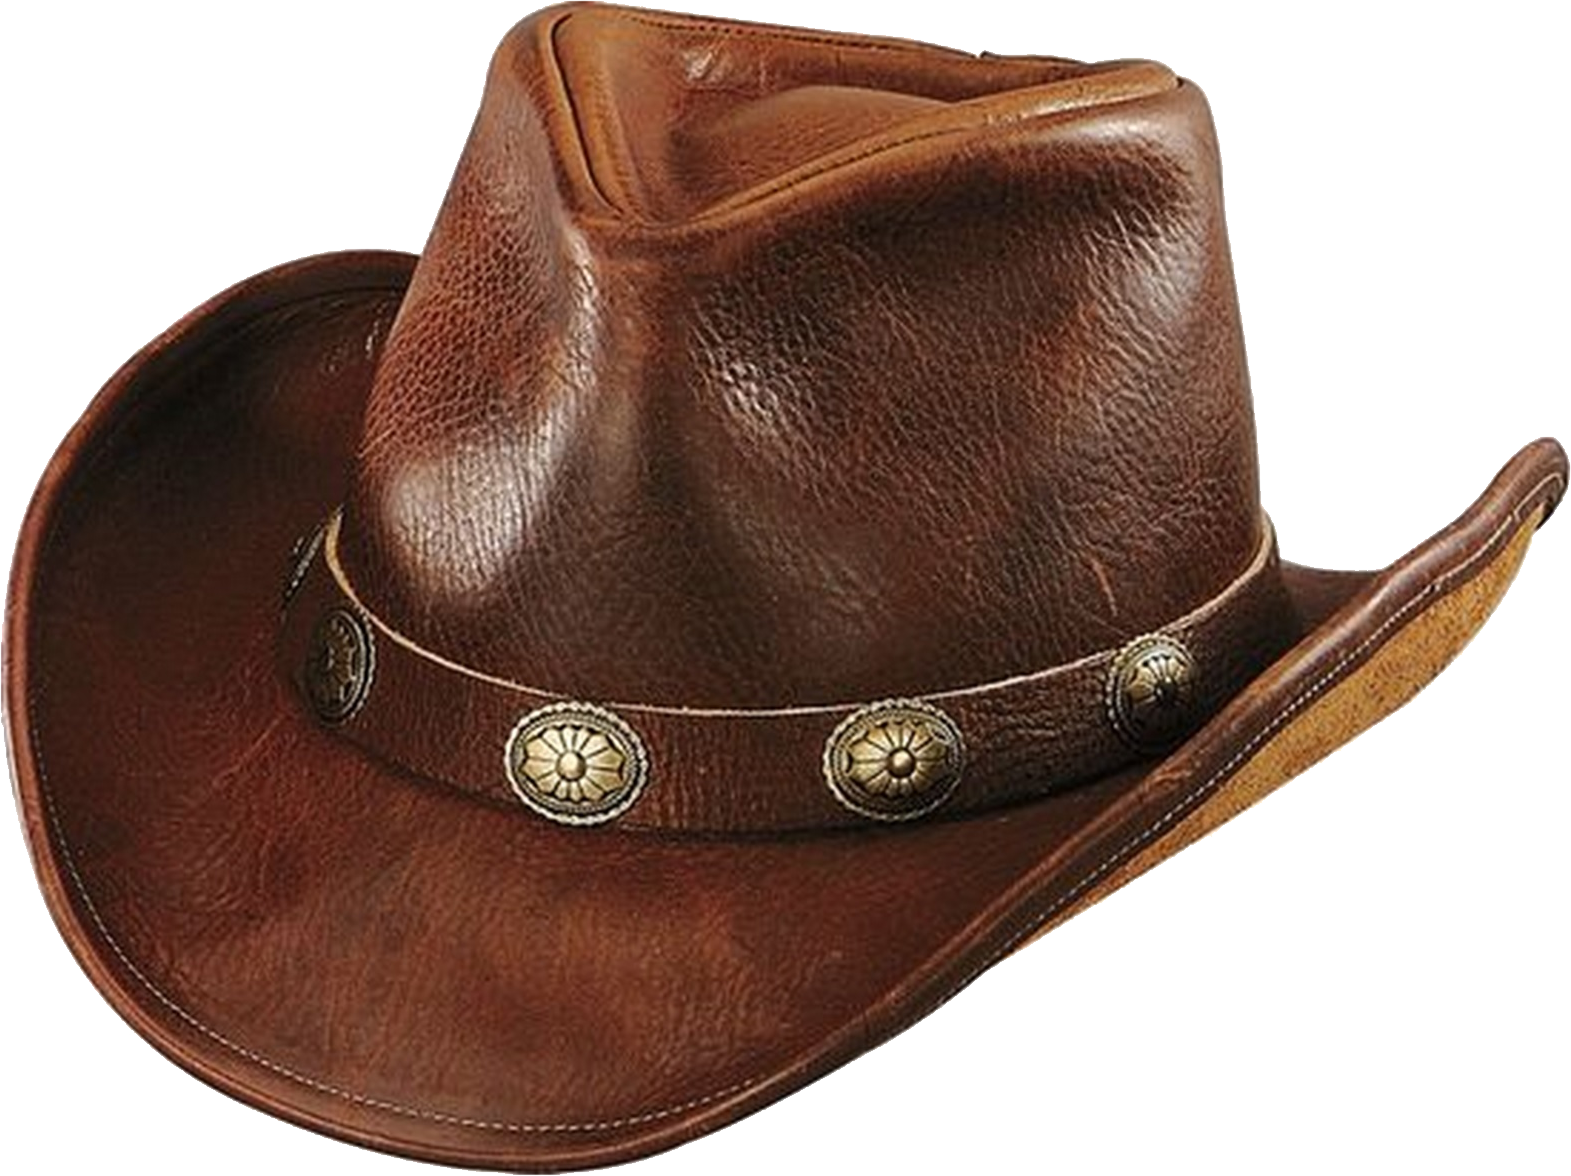 Cowboy hat png